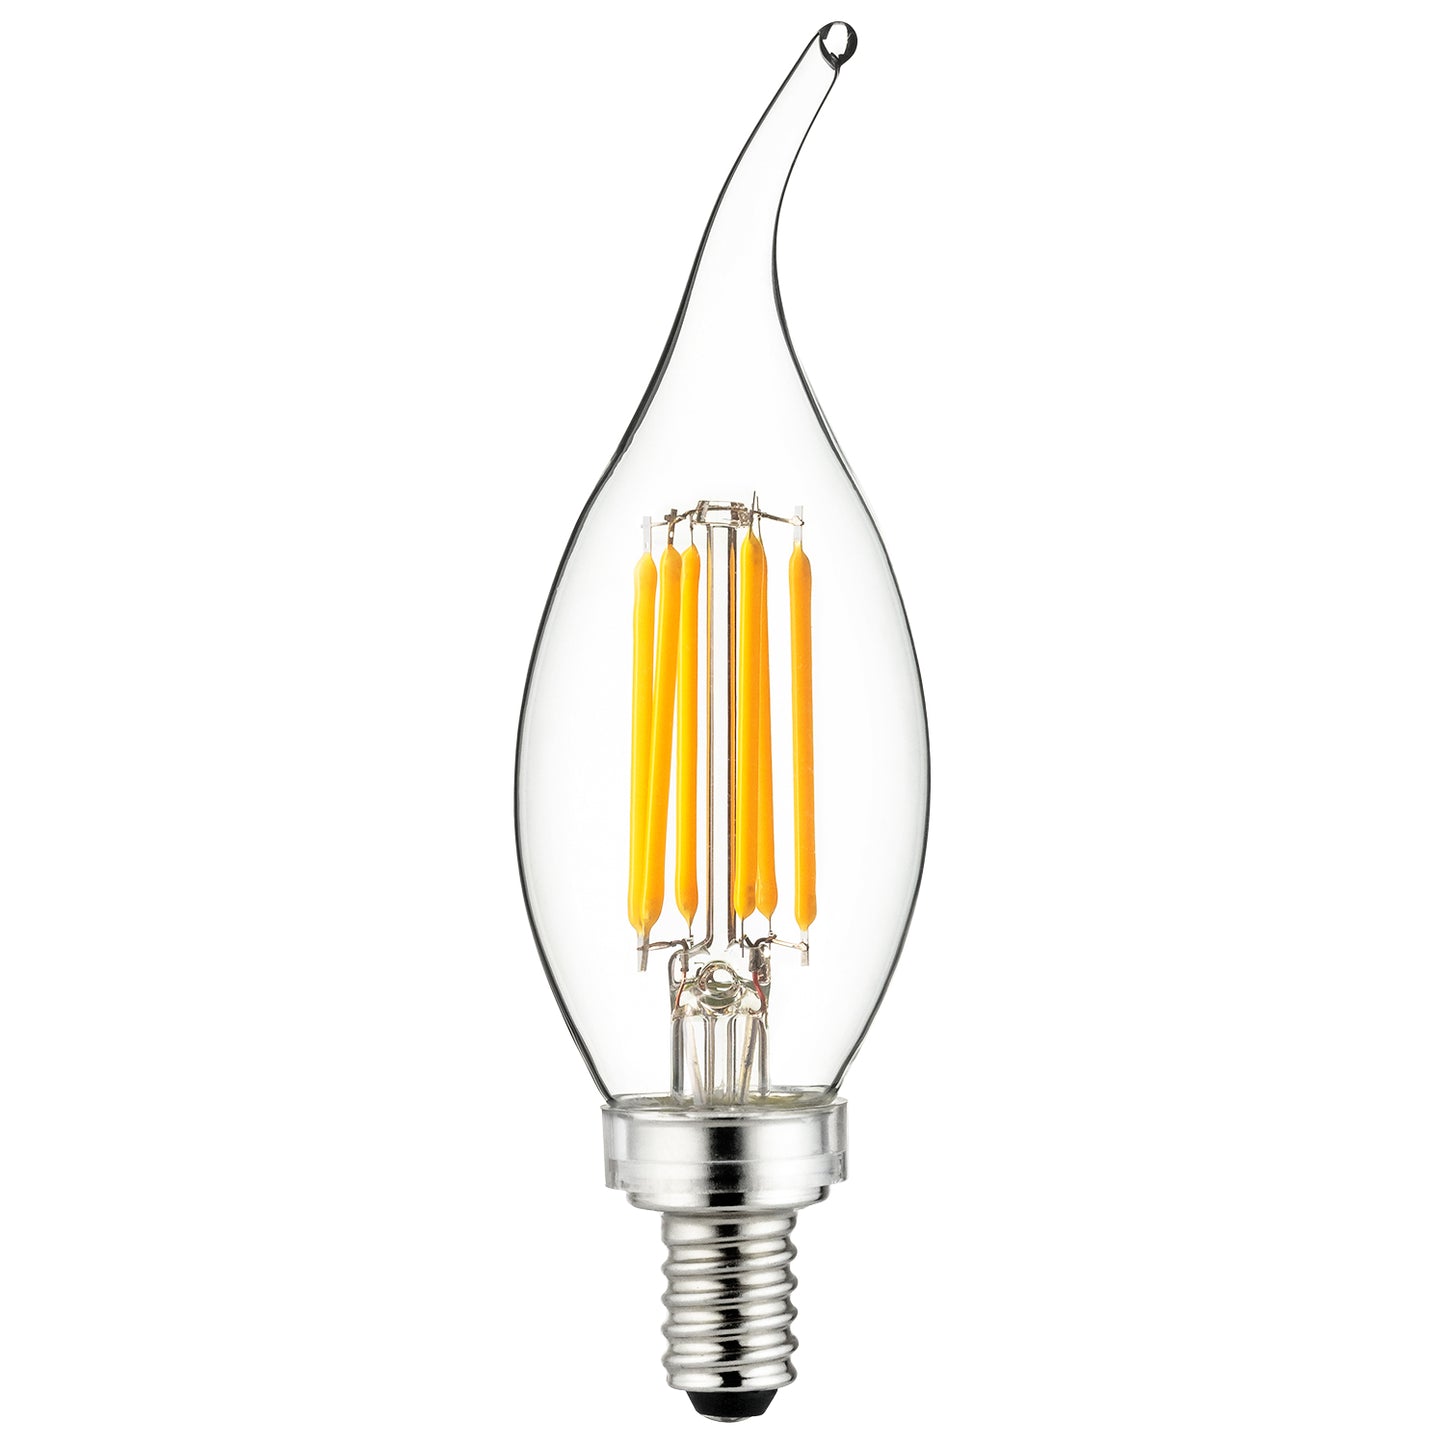 Sunlite LED Filament CA11 Flame Tip Chandelier Light Bulb, 5 Watts  (60W Equivalent), 600 Lumens, Candelabra Base (E12), Edison style, Dimmable, ETL Listed, 2700K - Warm White, 6 Pack